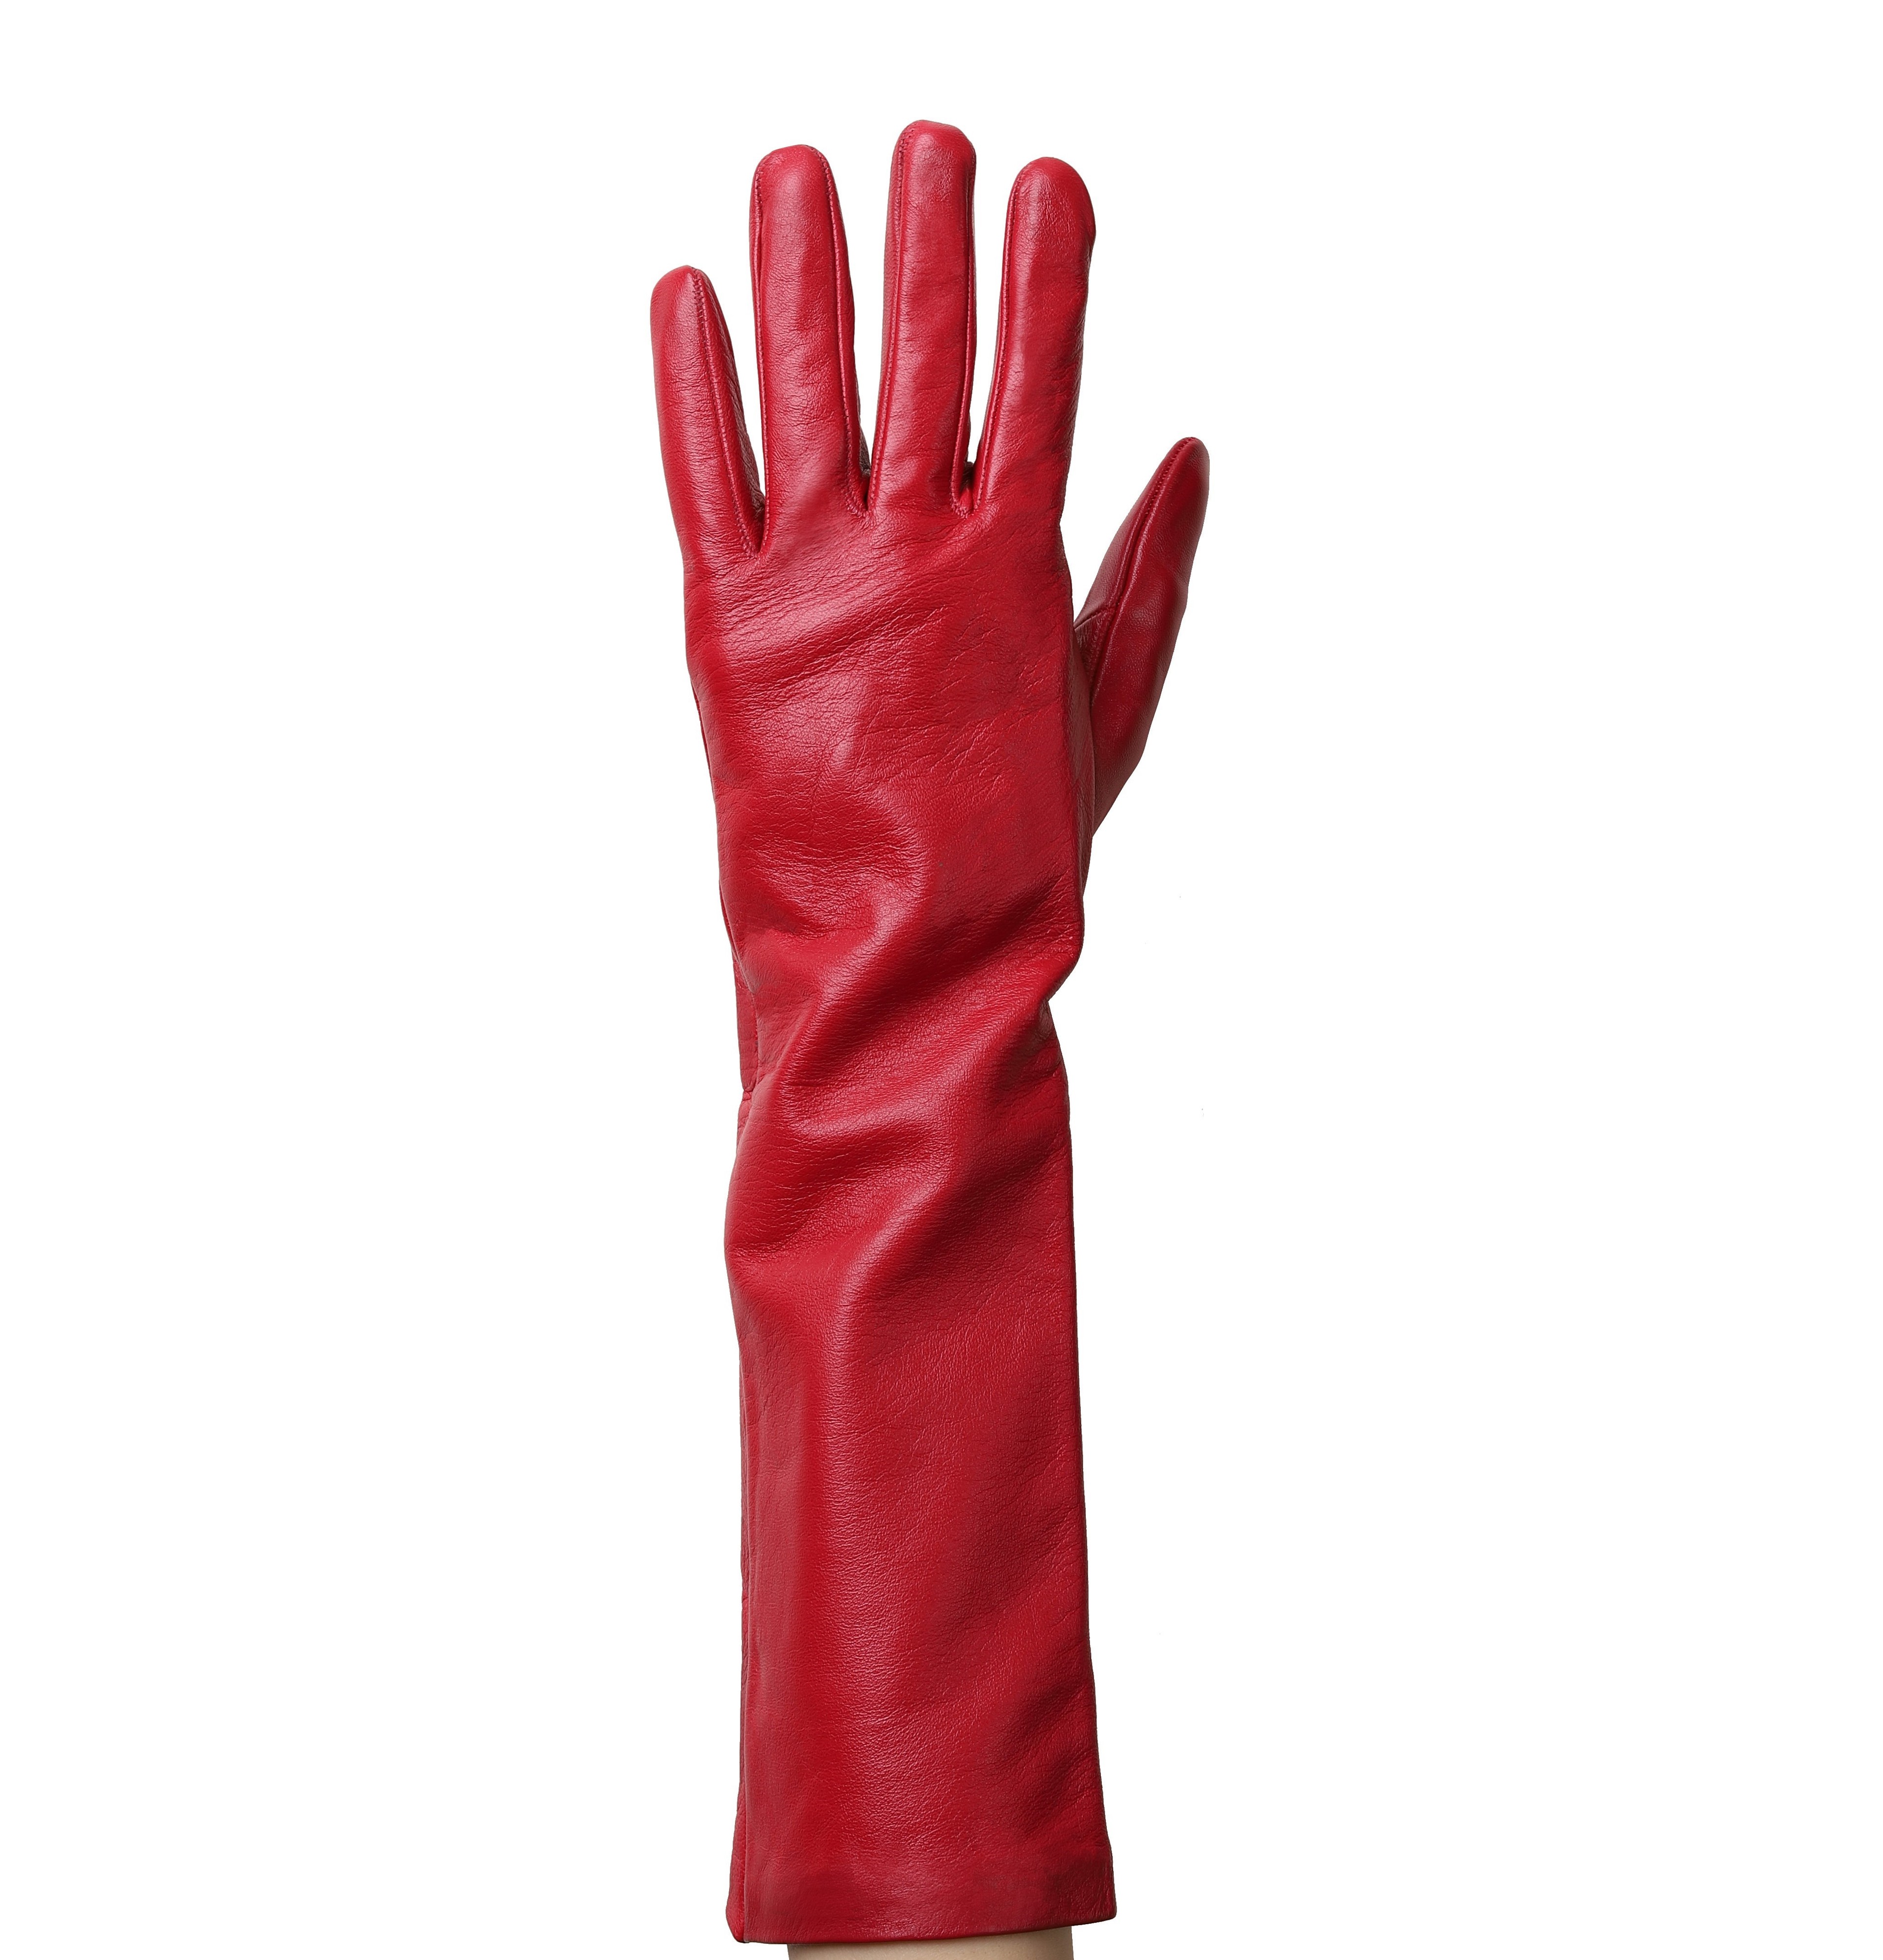 Lunghetta Long Leather Opera Gloves for Women